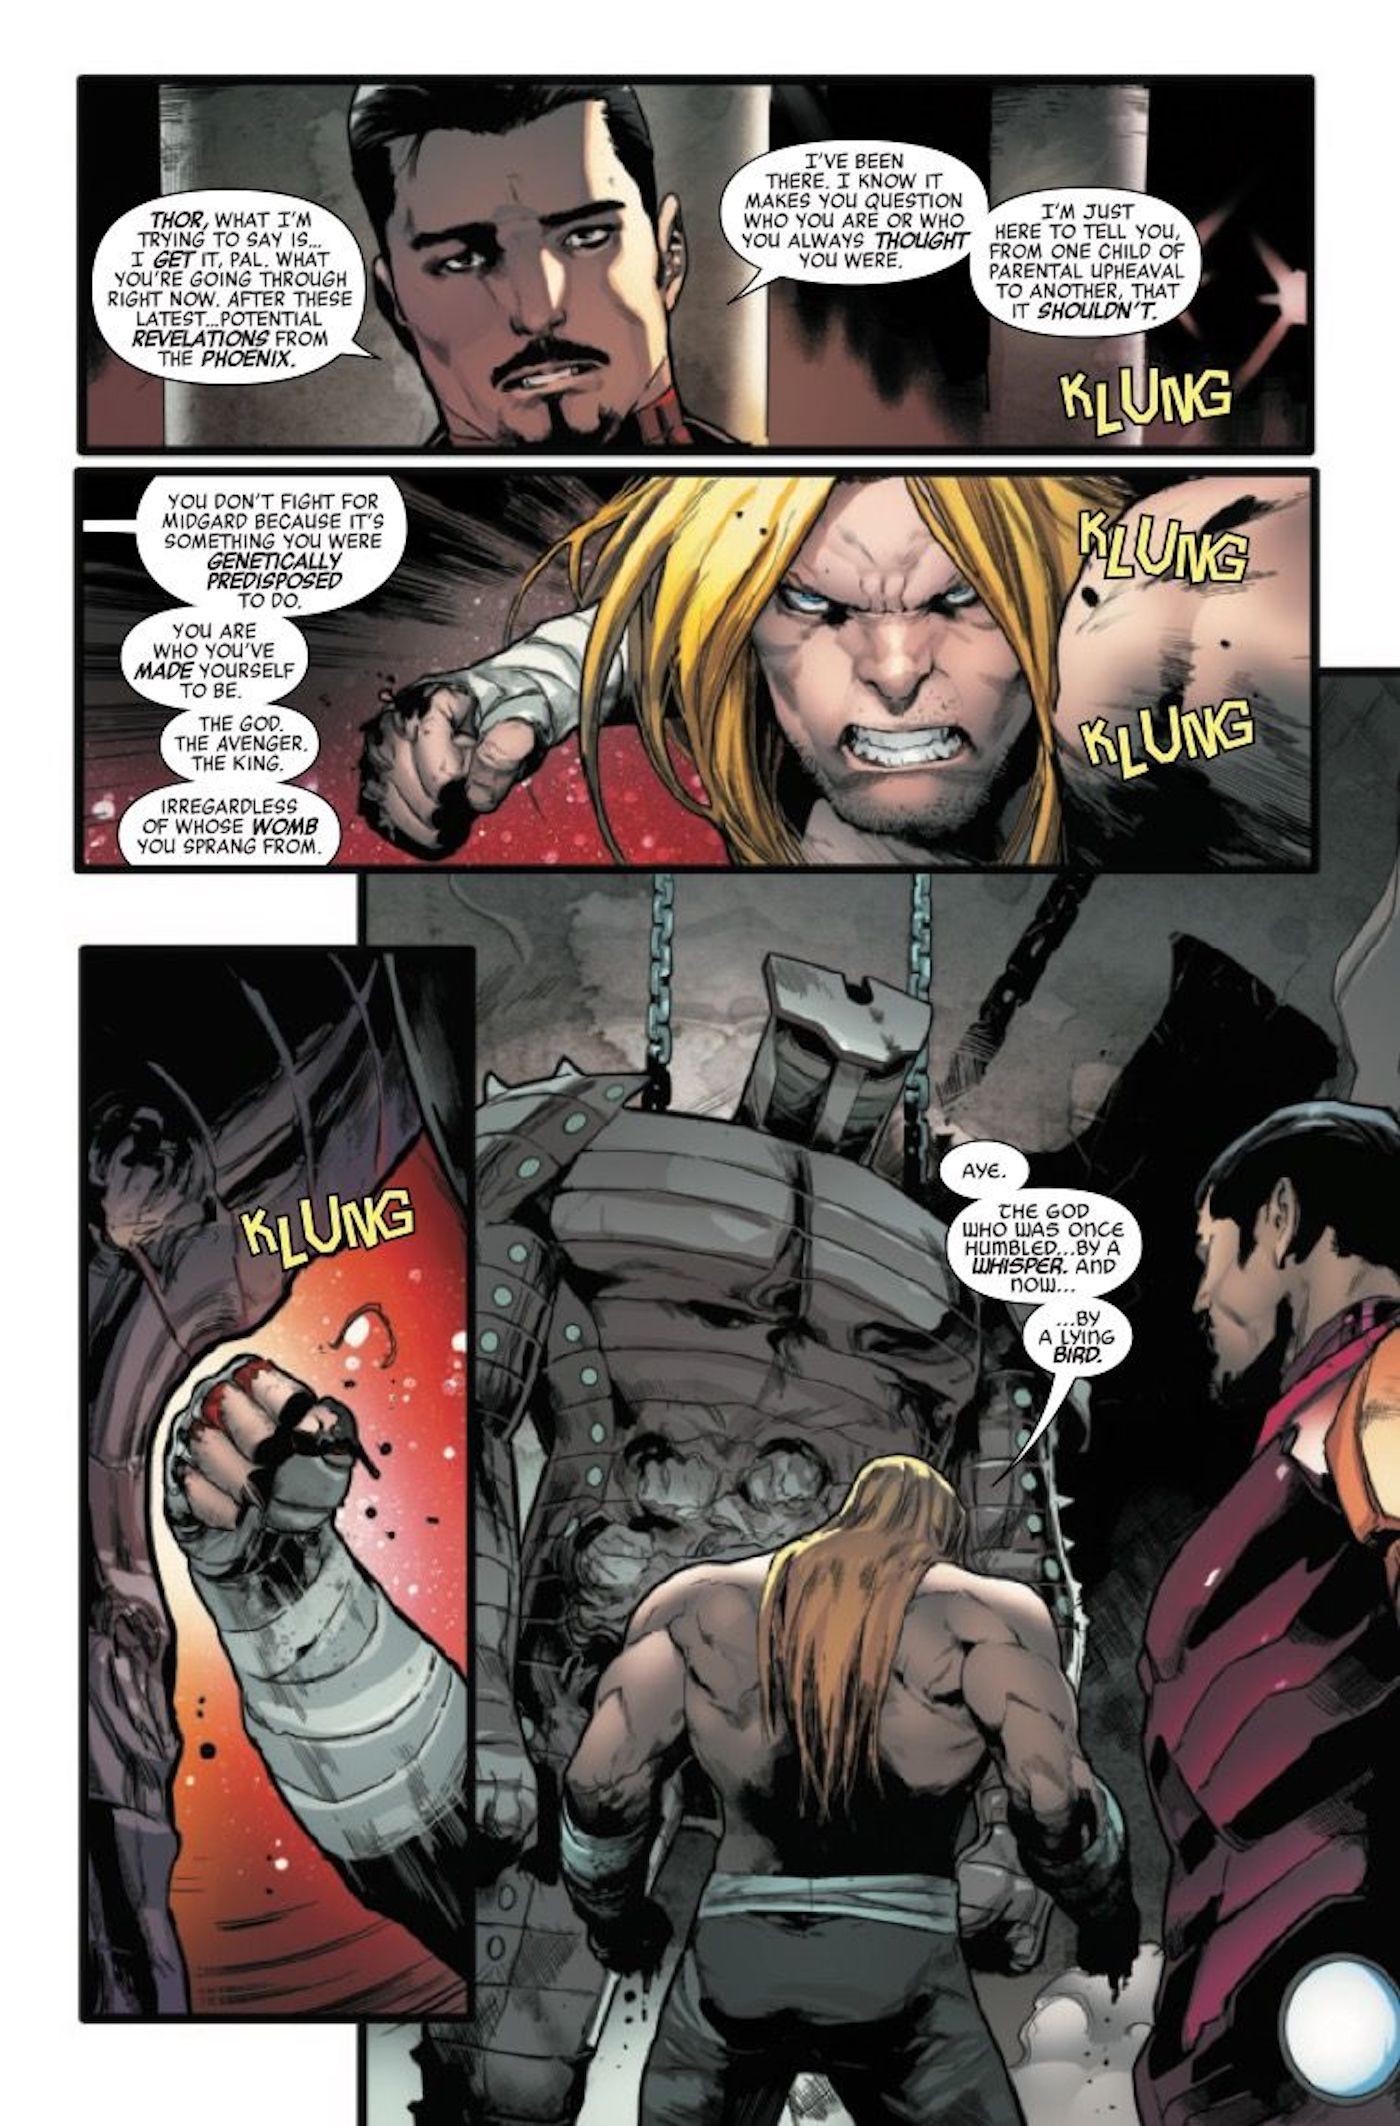 Thor vs Dark Phoenix Kicks Off the Avengers Multiversal War